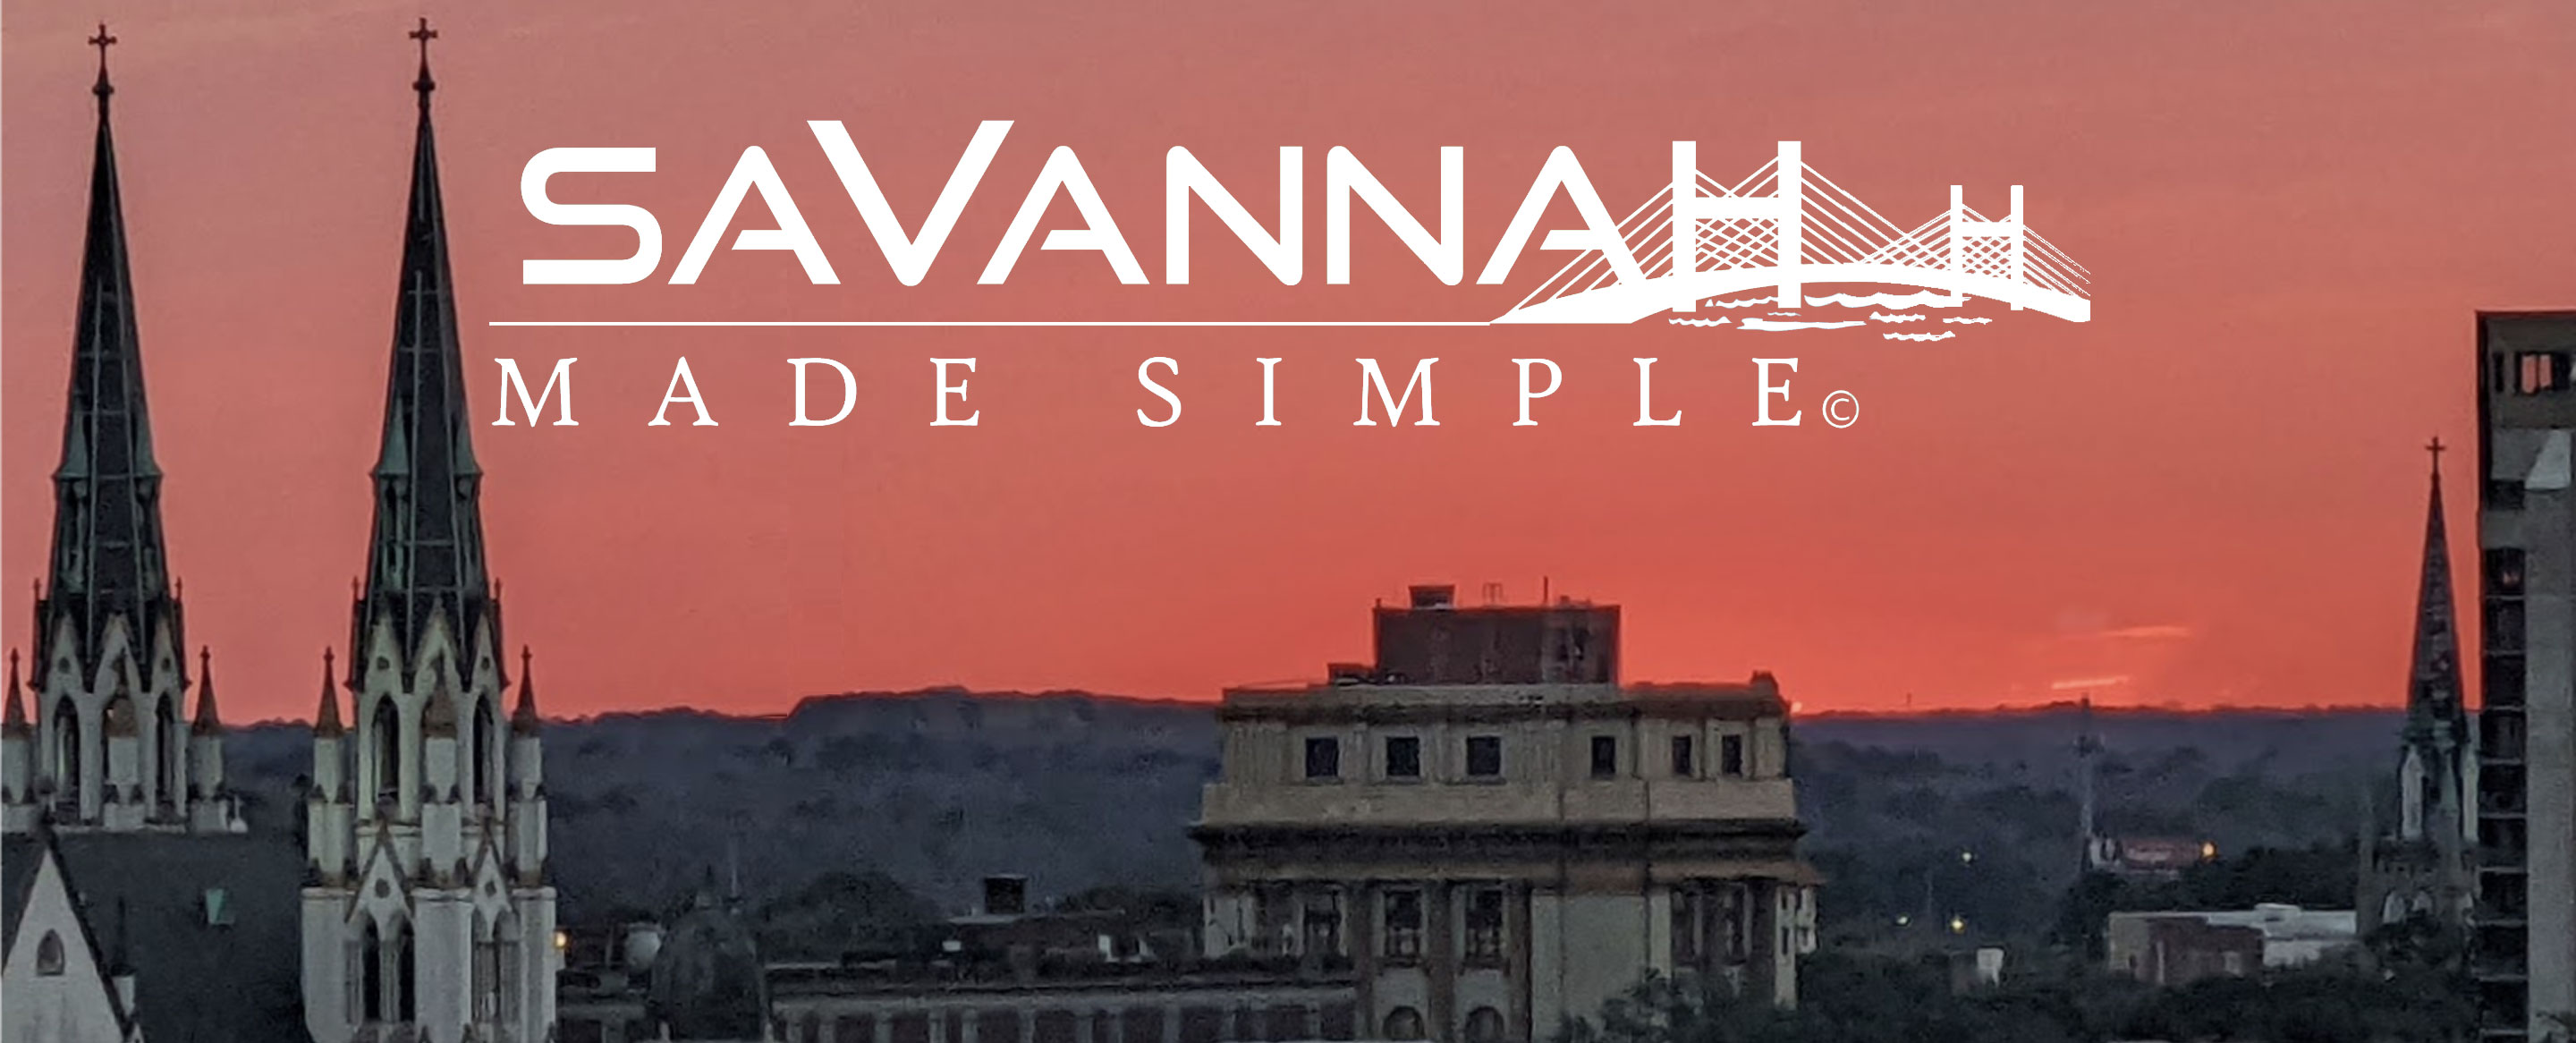 Savannah Made Simple